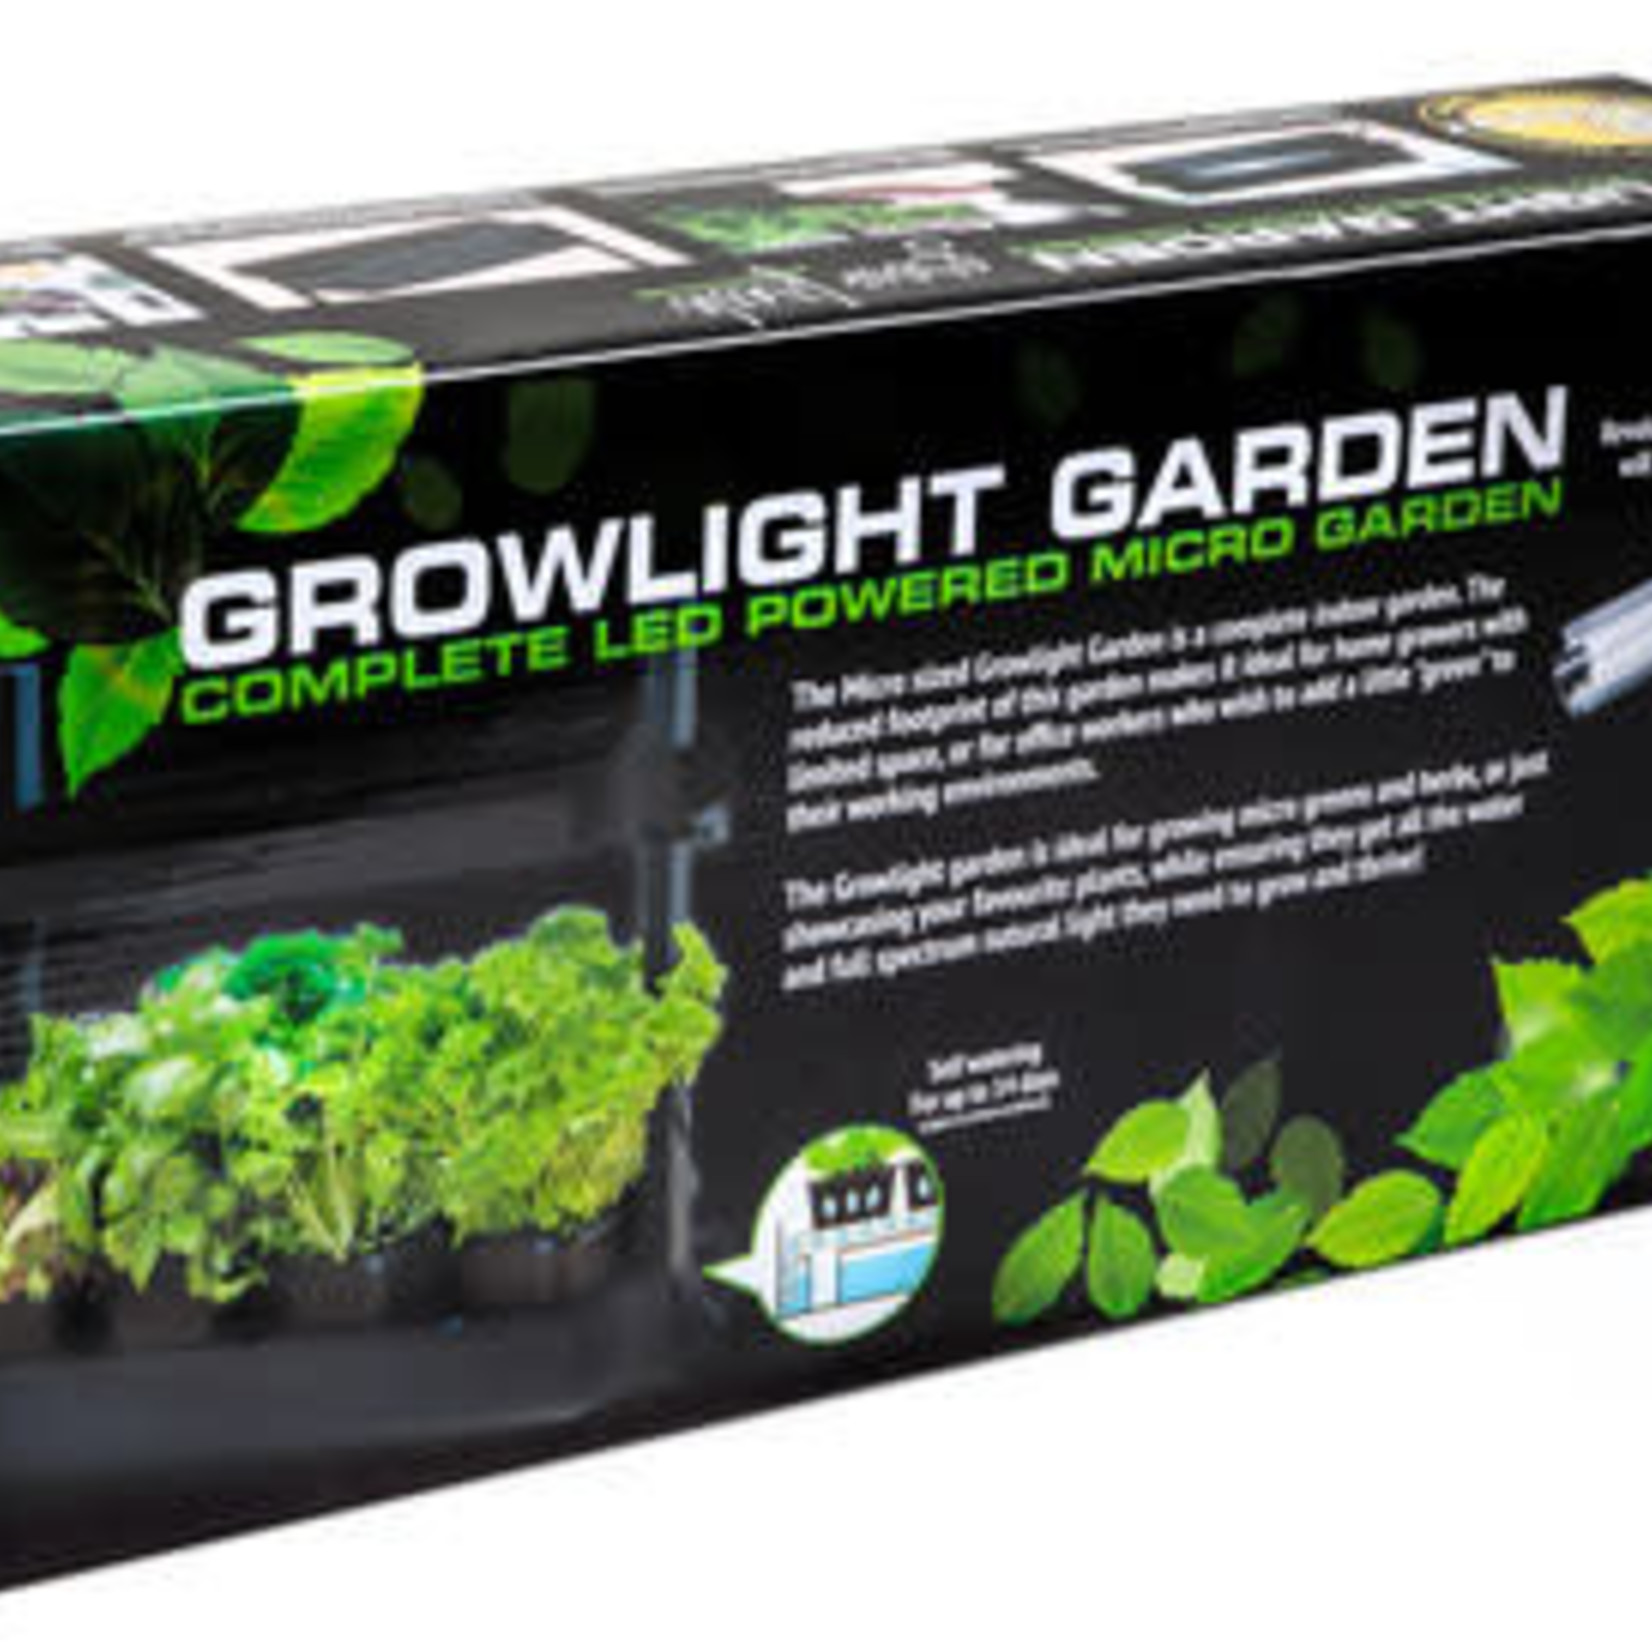 Sunblaster Growlight Garden Micro - Black - LED